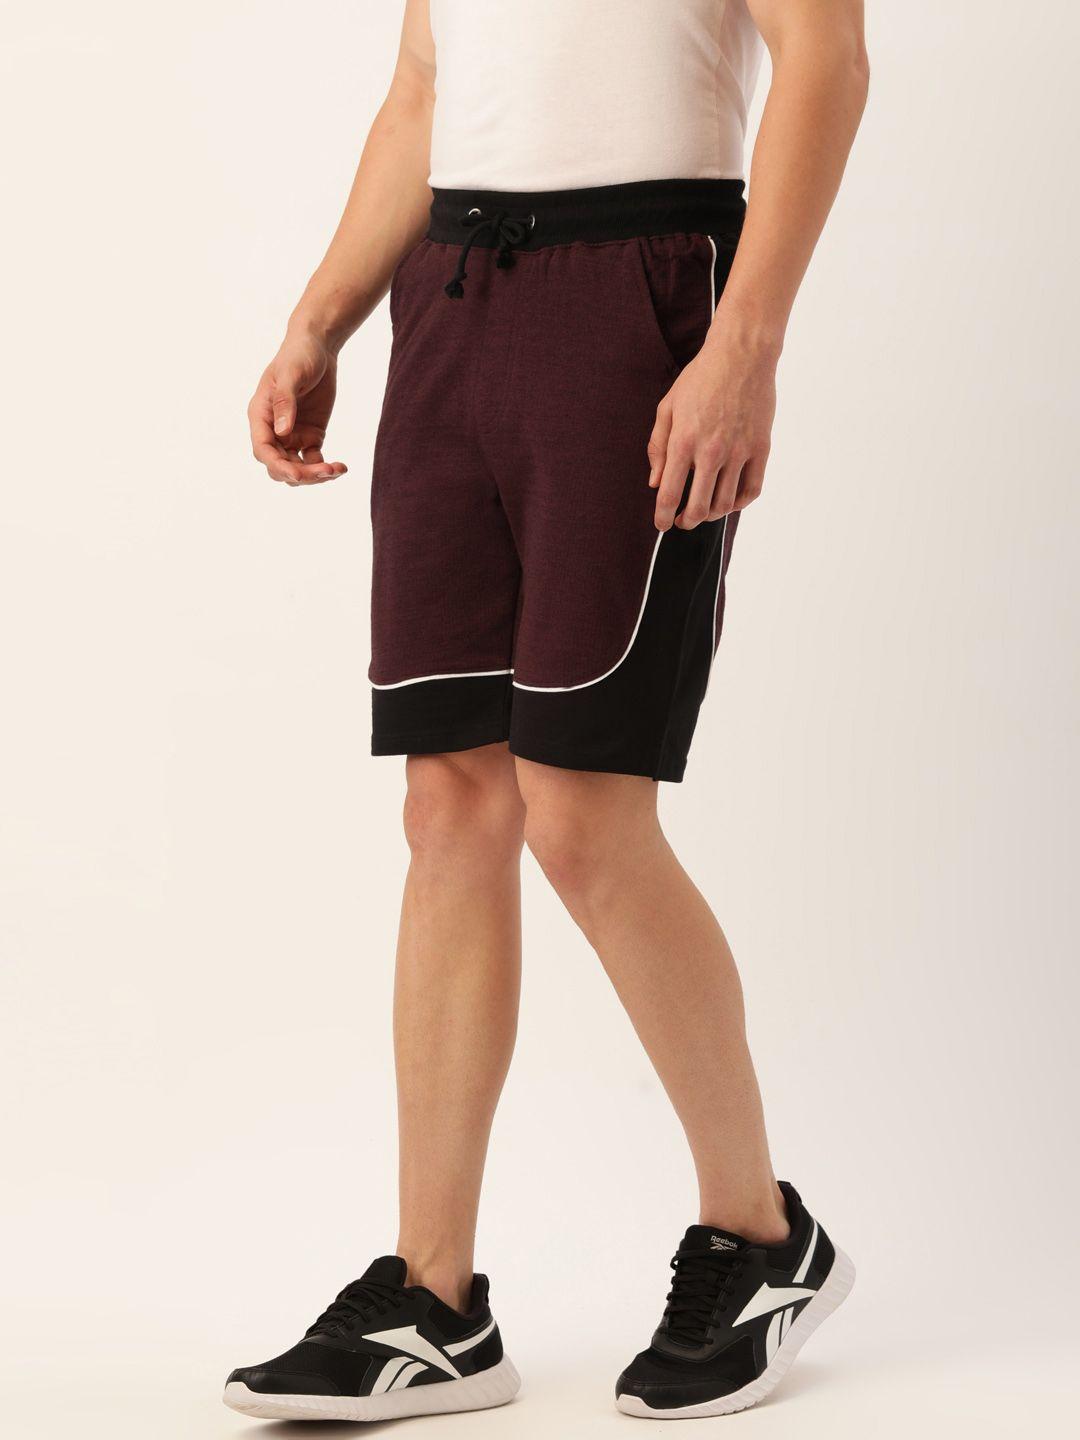 arise men maroon & black colourblocked shorts